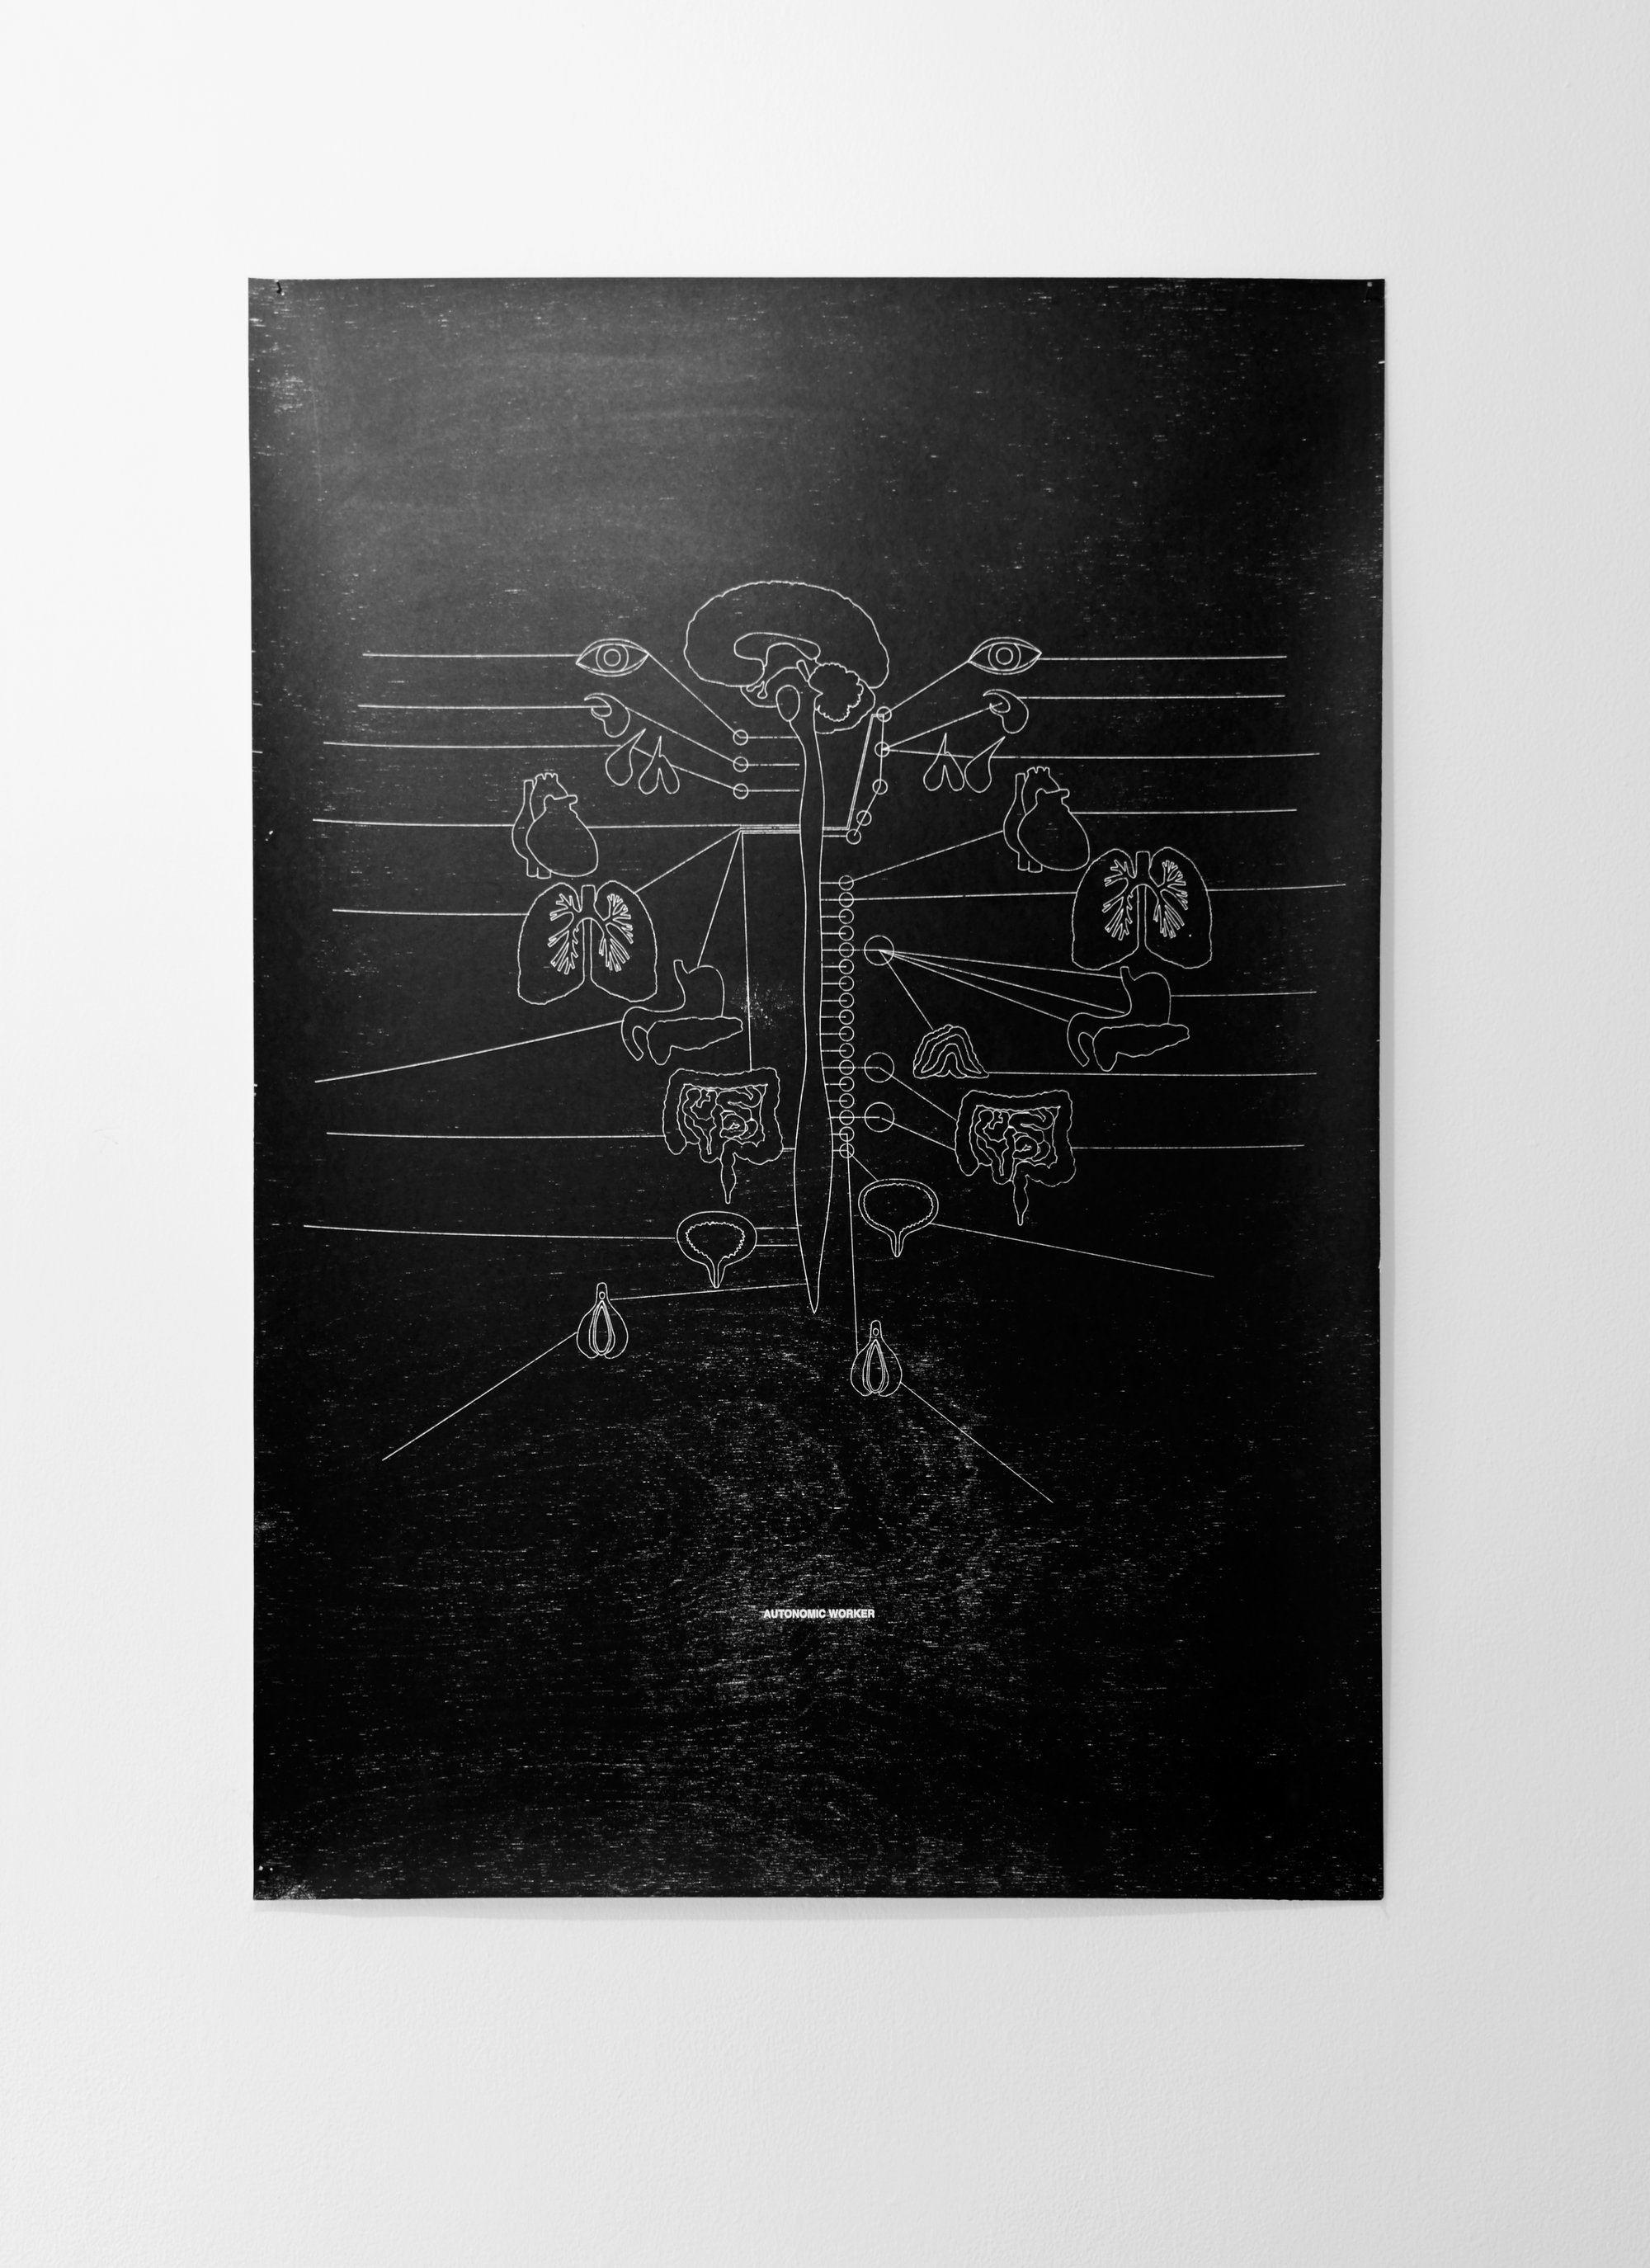 Sidsel Meineche Hansen, Autonomic Worker, laser woodcut on paper, mounted on aluminium under museum glass, 101.3 x 70.7 cm, 2013/2016